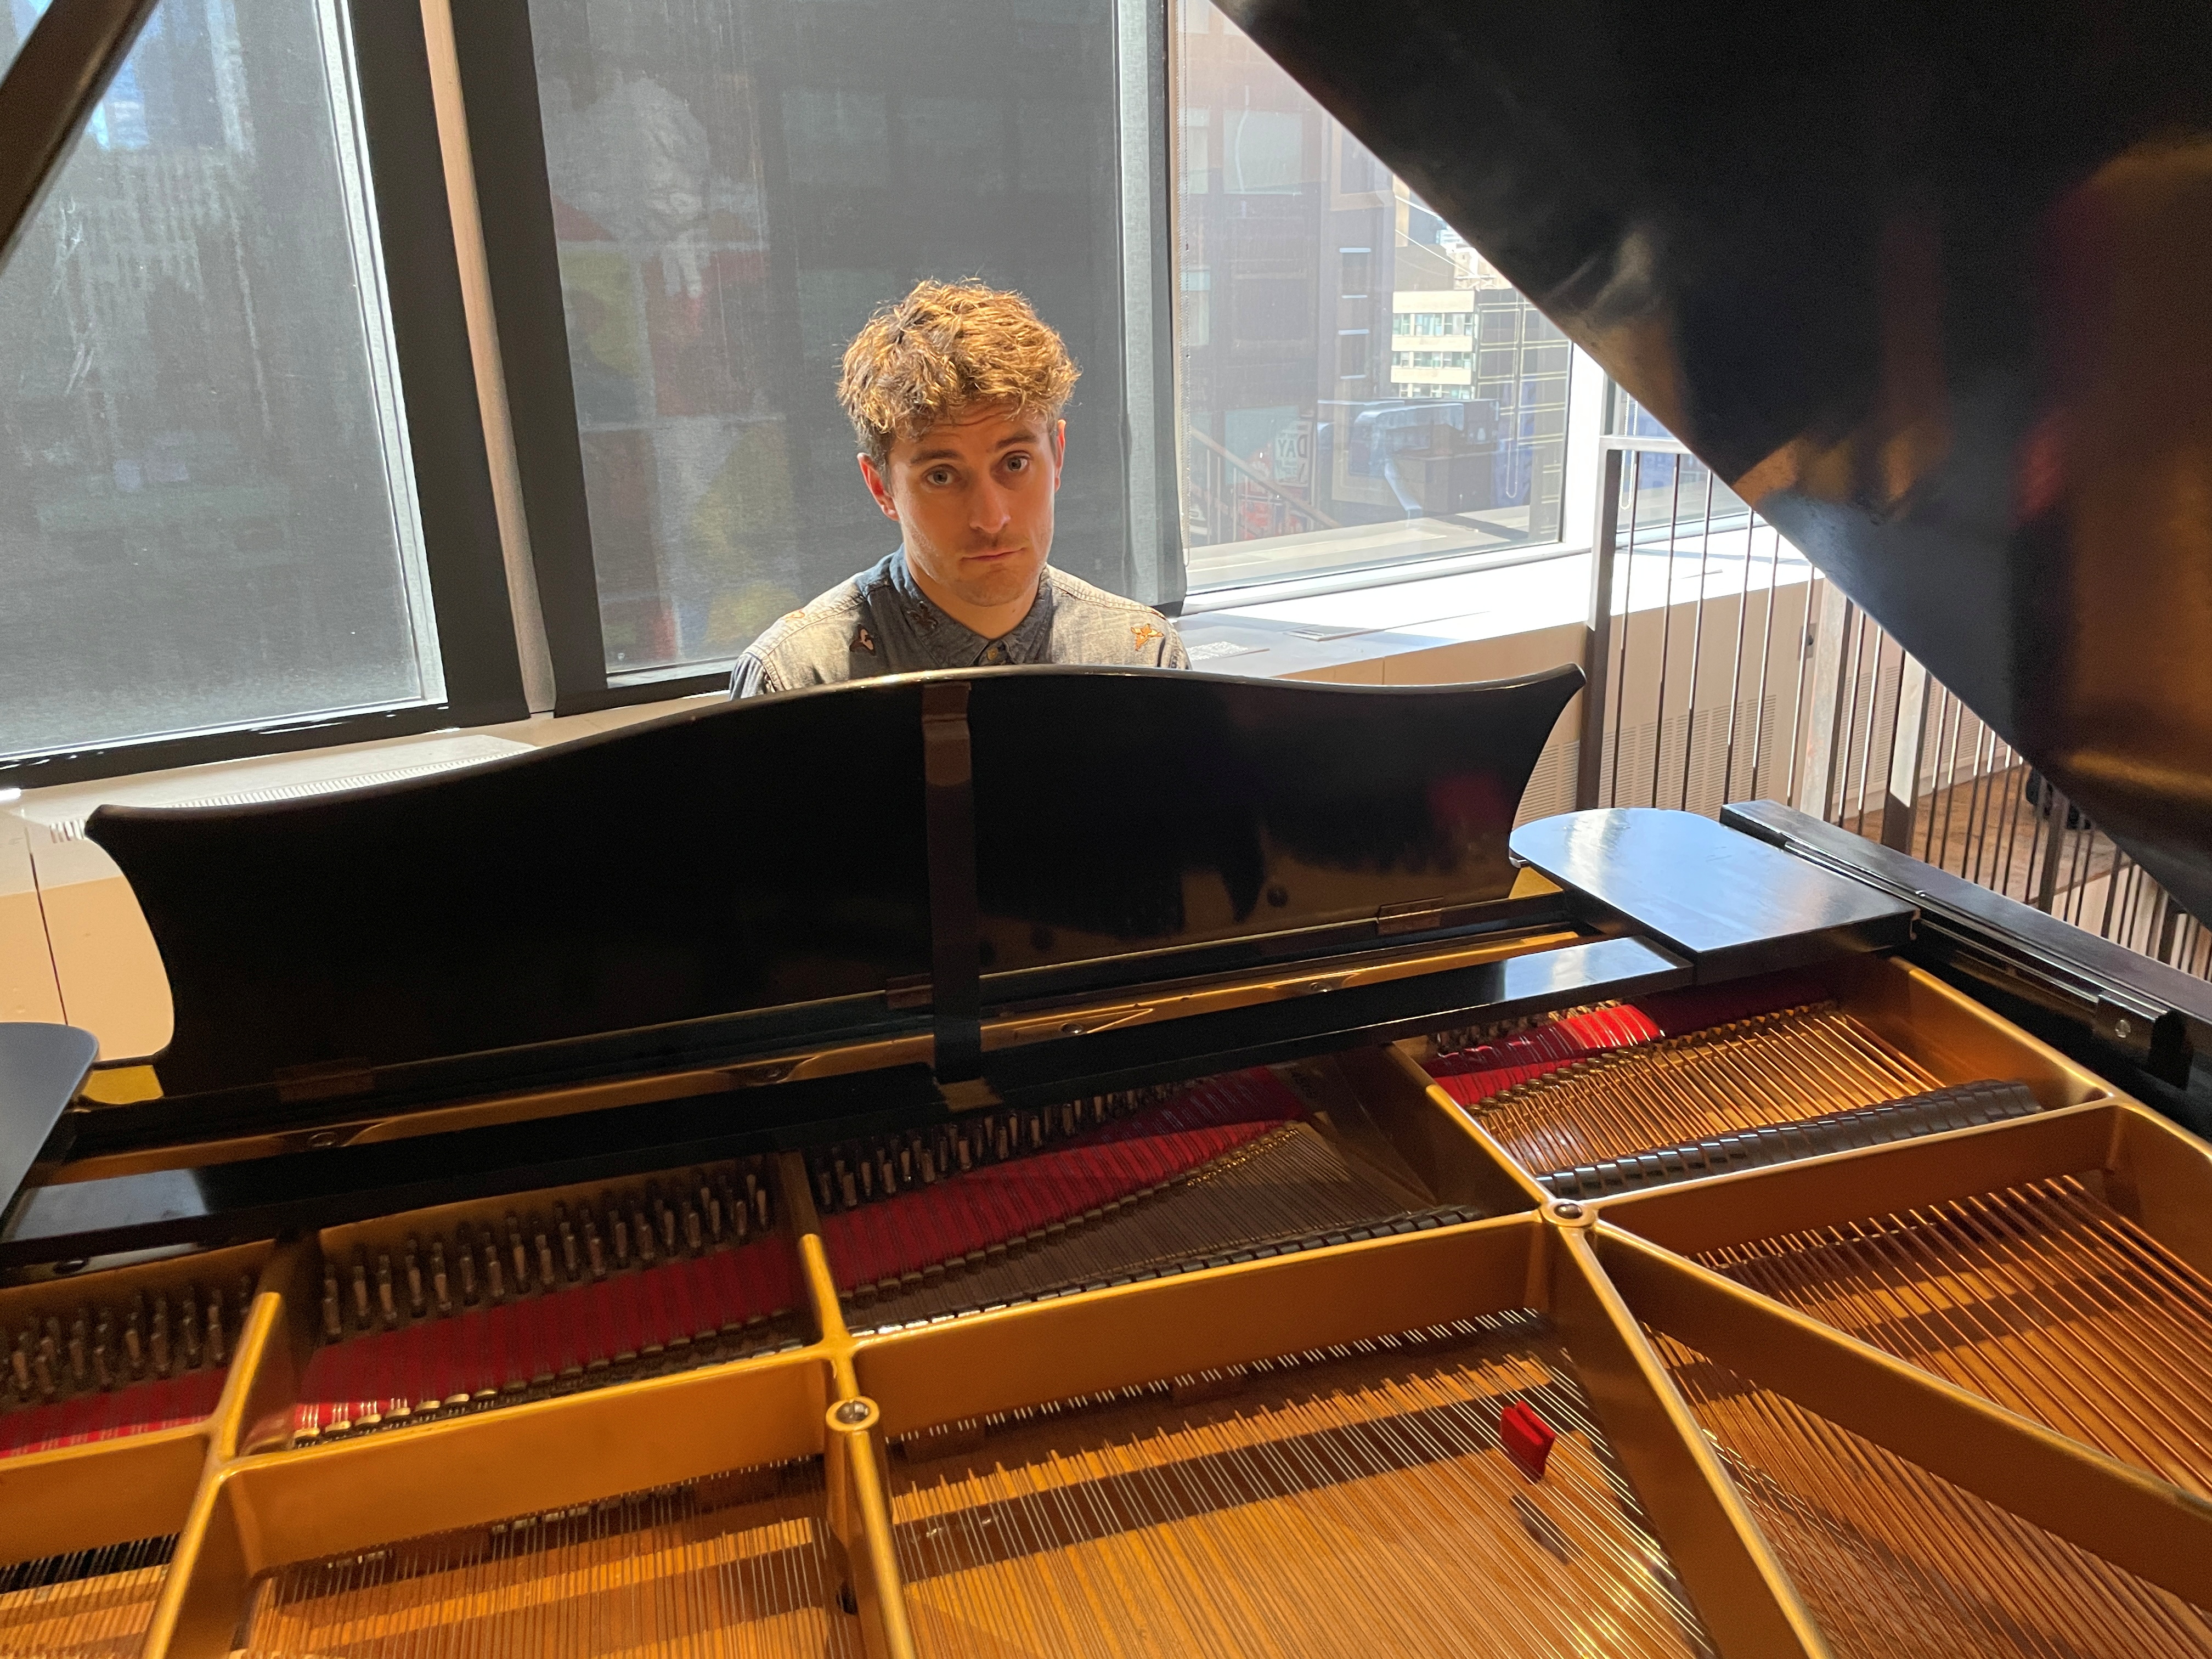 Jakub Jozef Orlinski, opera singer and breakdance performer, plays piano at the Warner Music offices in New York City, New York, U.S. December 3, 2021. REUTERS/Aleksandra Michalska